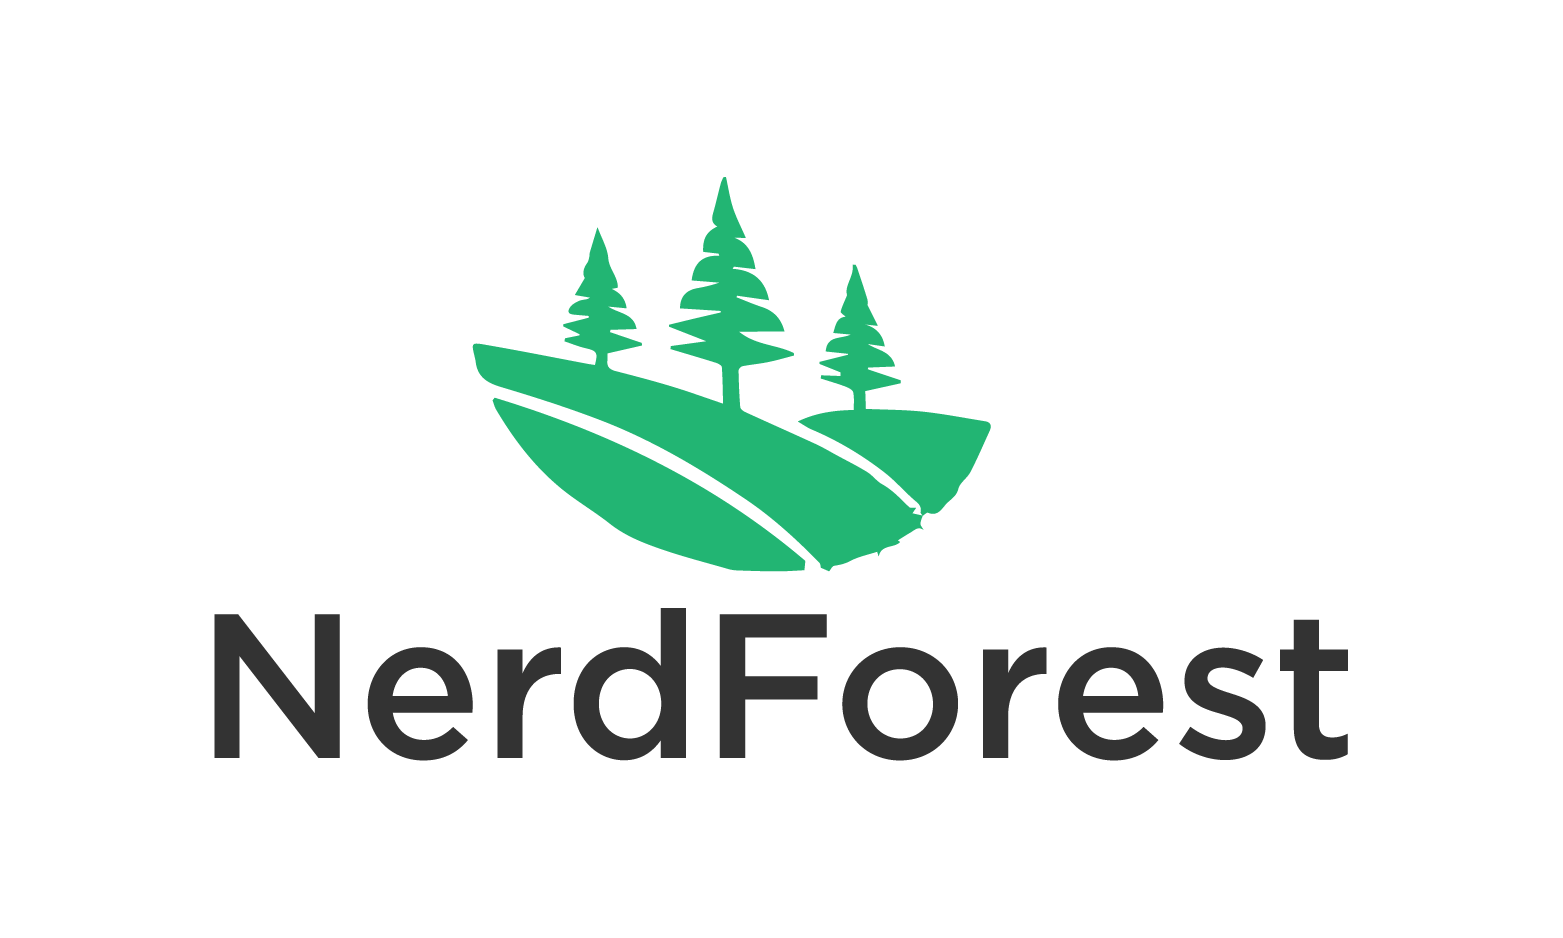 NerdForest.com - Creative brandable domain for sale